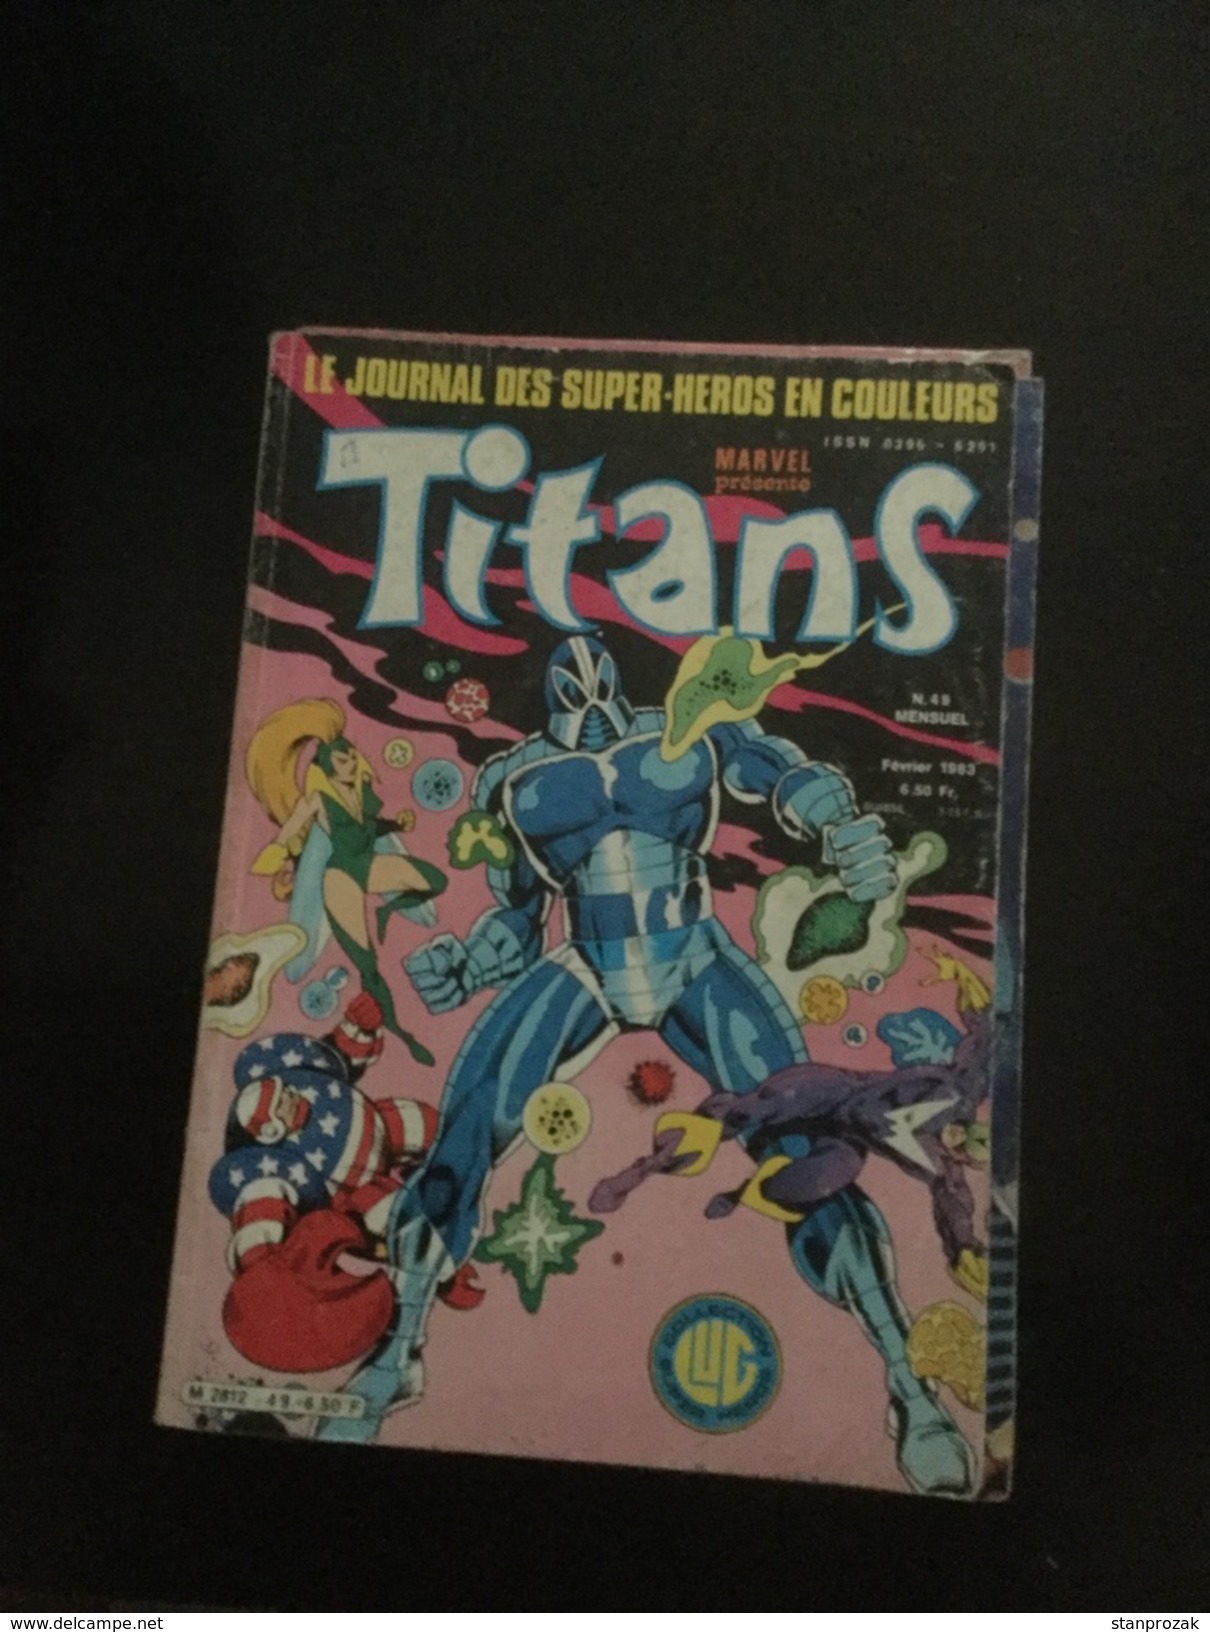 Titans 49 - Titans